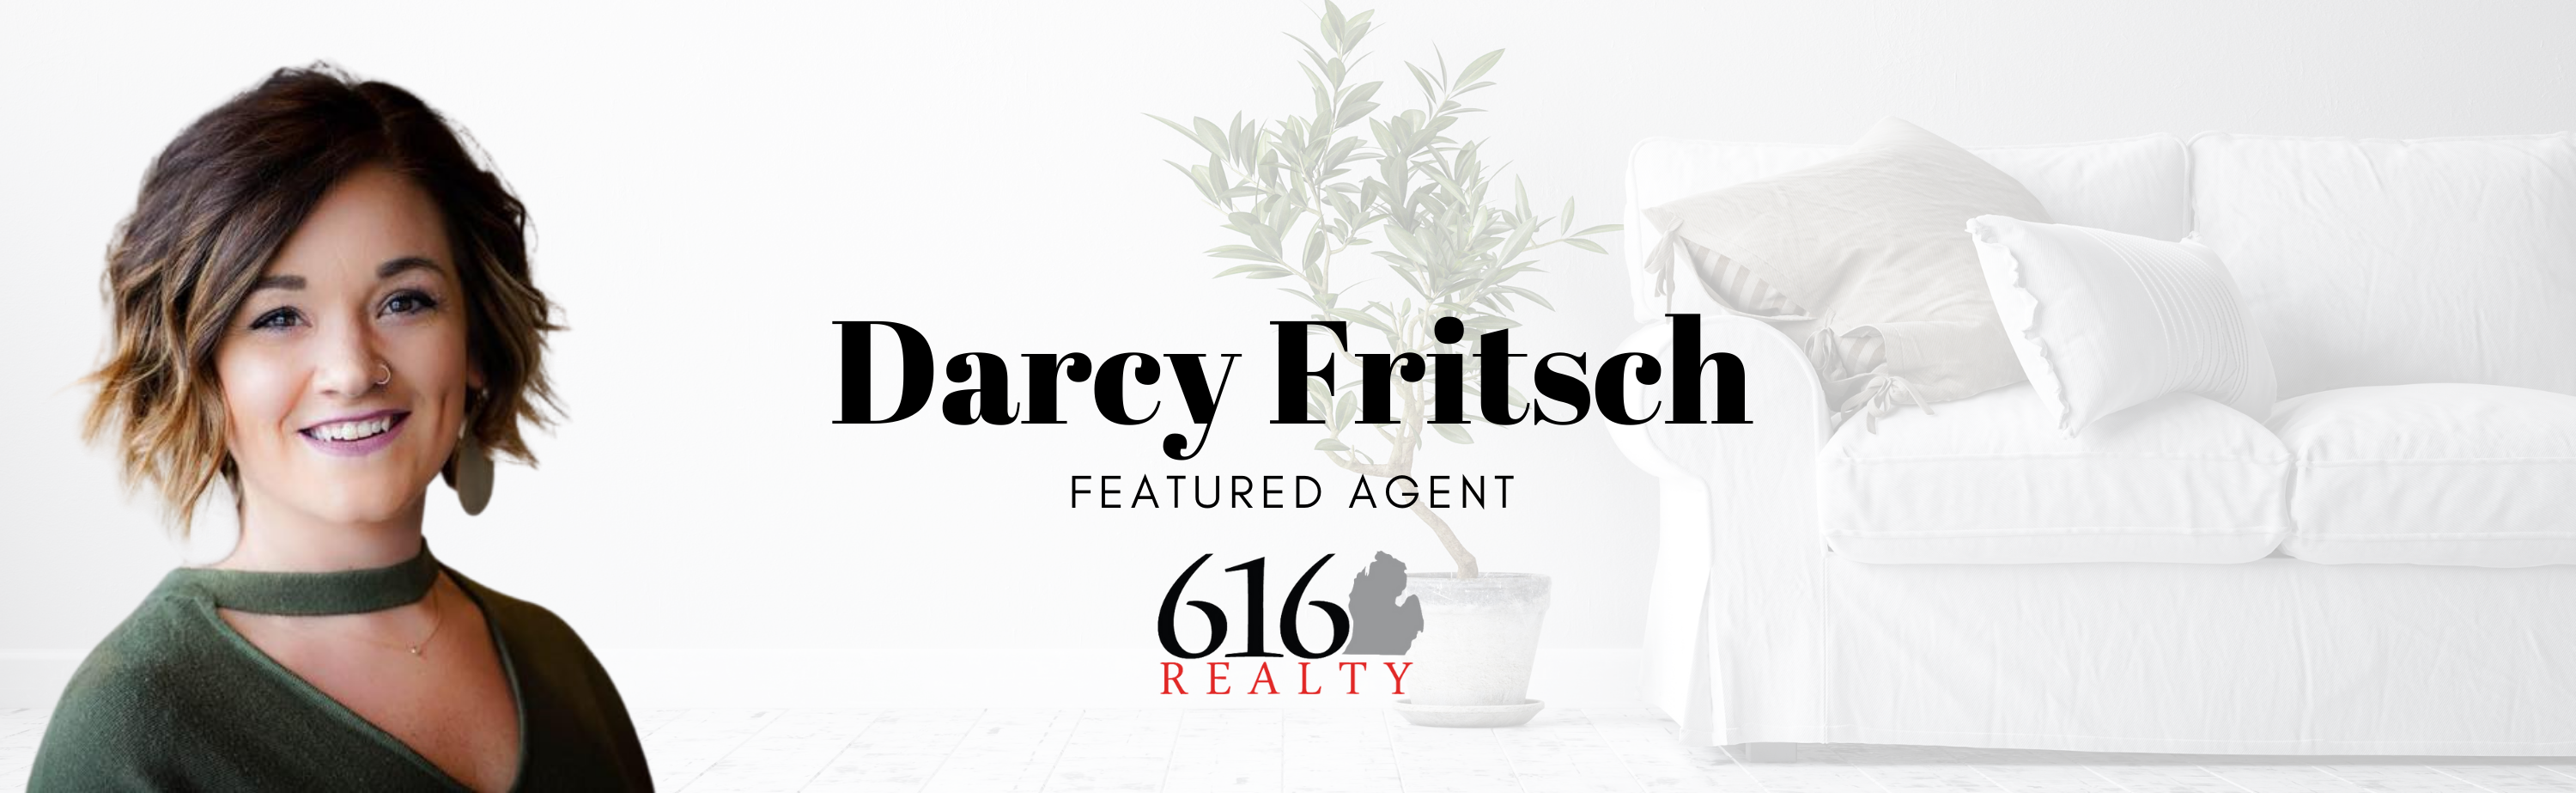 Darcy-Fritsch-Featured-Agent-